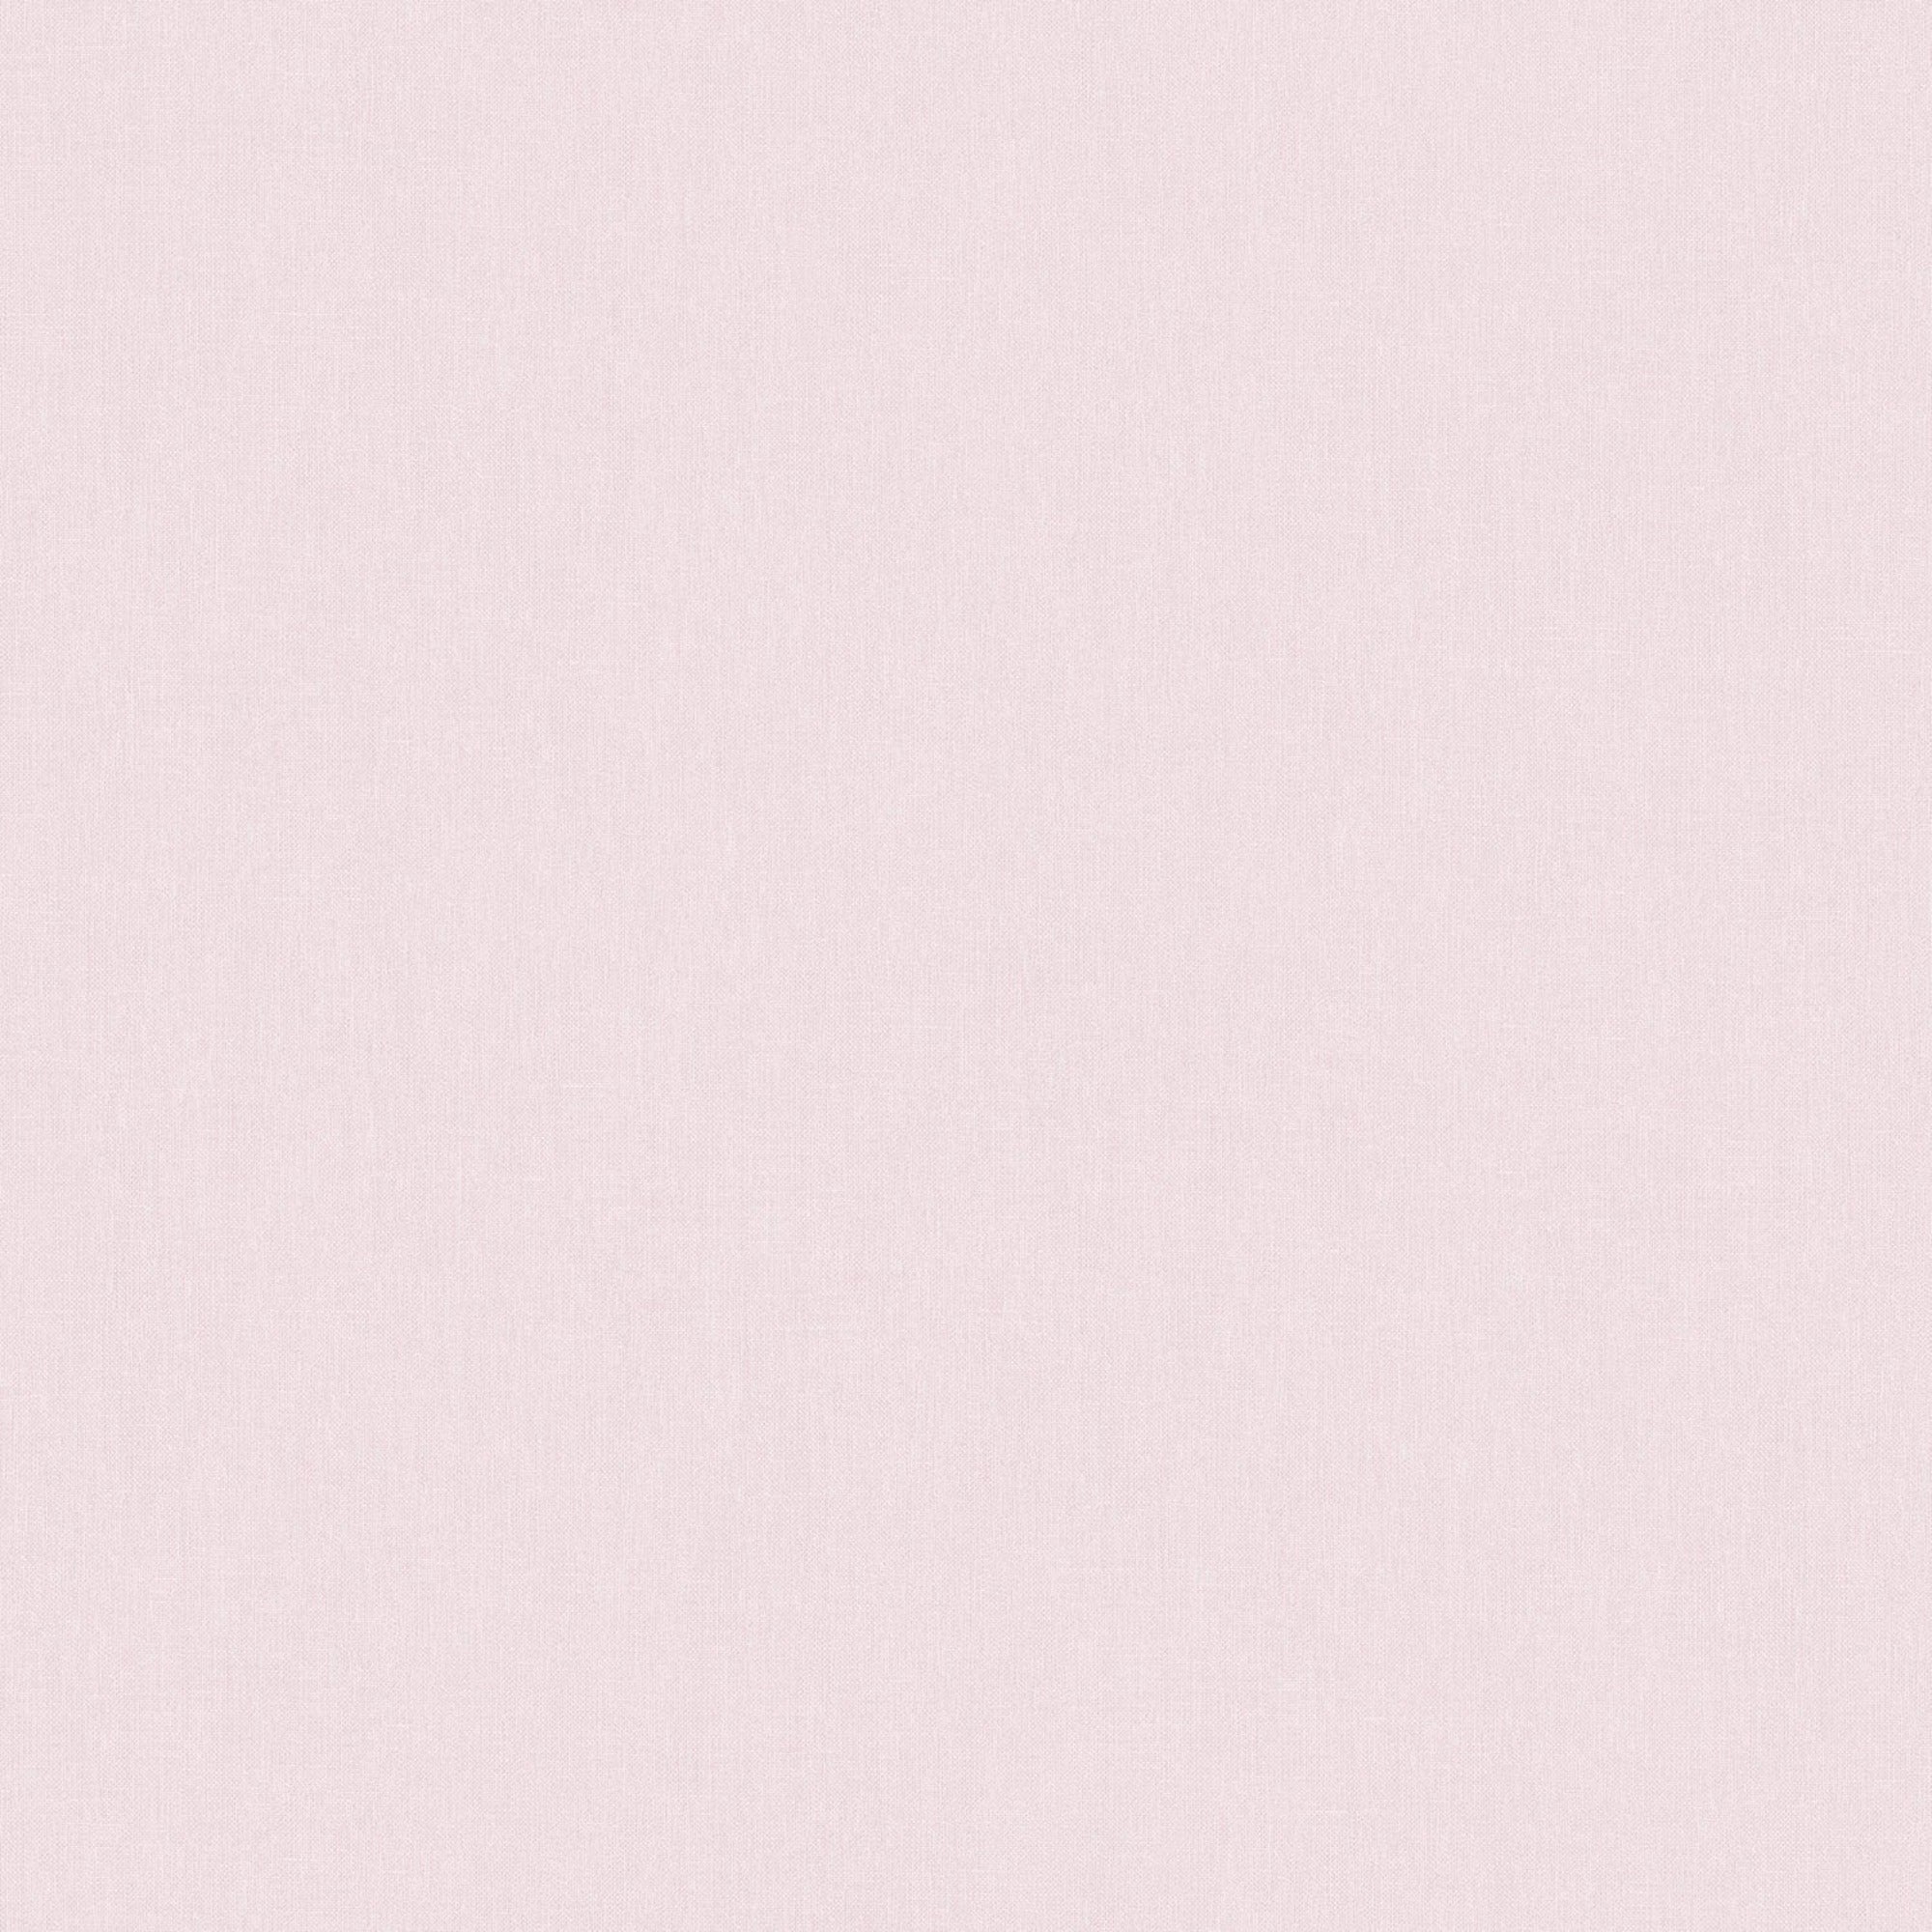 Easeful Texture Pink Wallpaper | WonderWall by Nobletts  | Ugepa